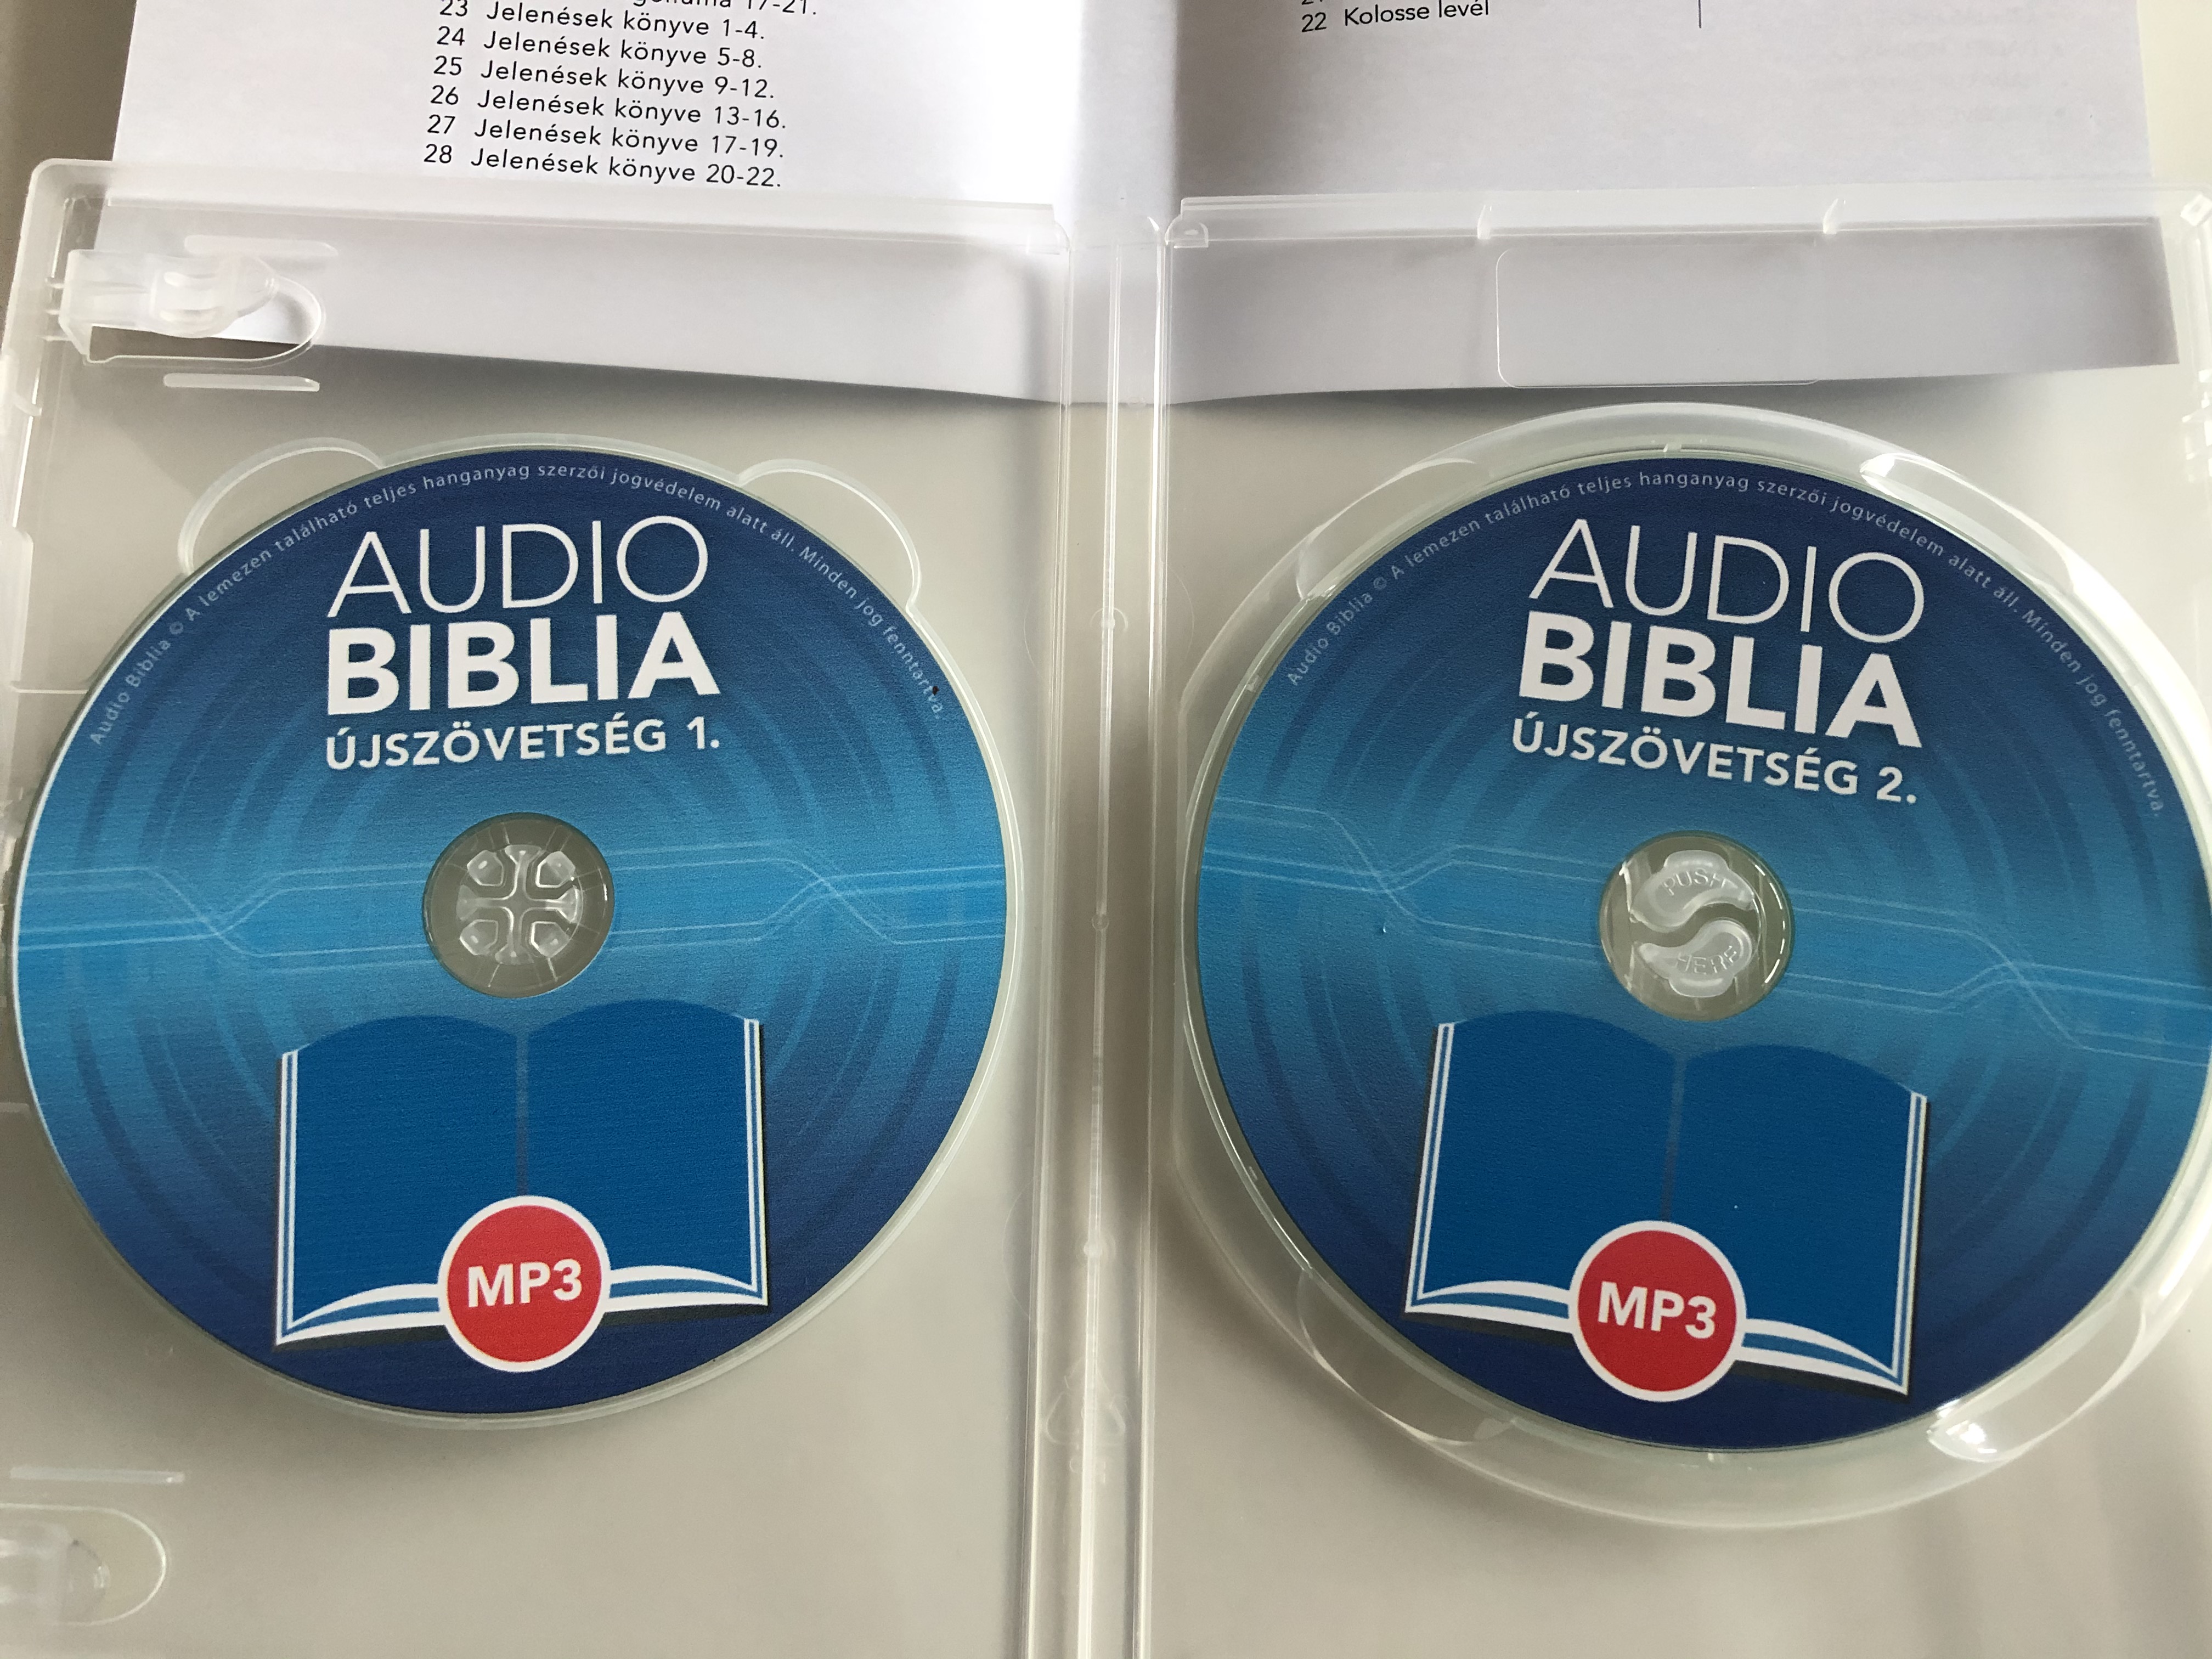 audio-biblia-mp3-cd-jsz-vets-g-hungarian-language-audio-bible-5.jpg